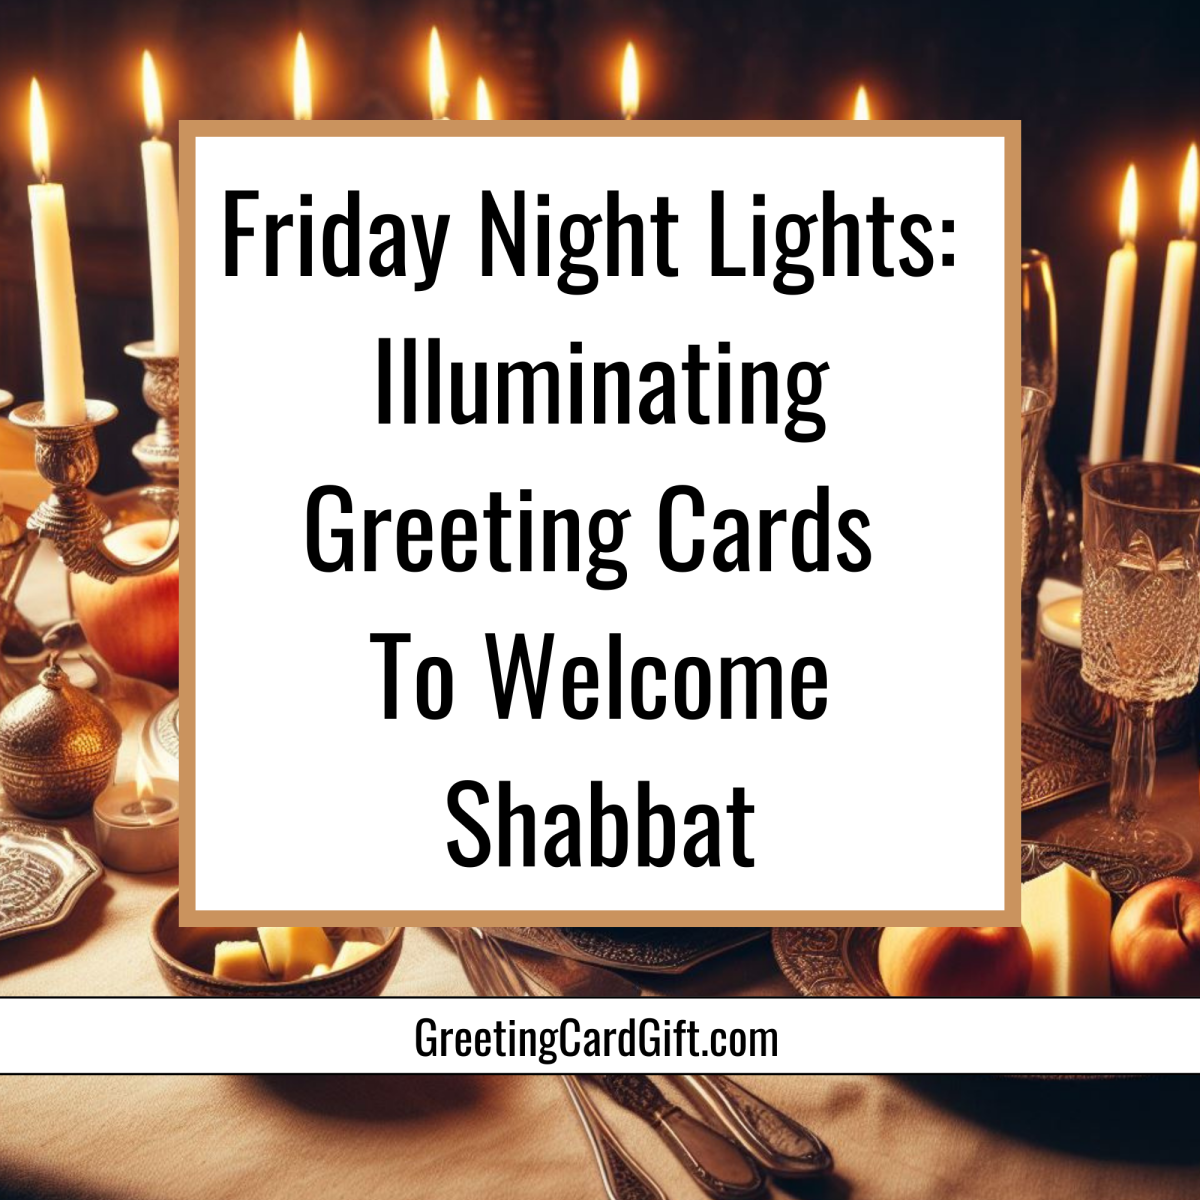 Friday Night Lights: Illuminating Greeting Cards To Welcome Shabbat